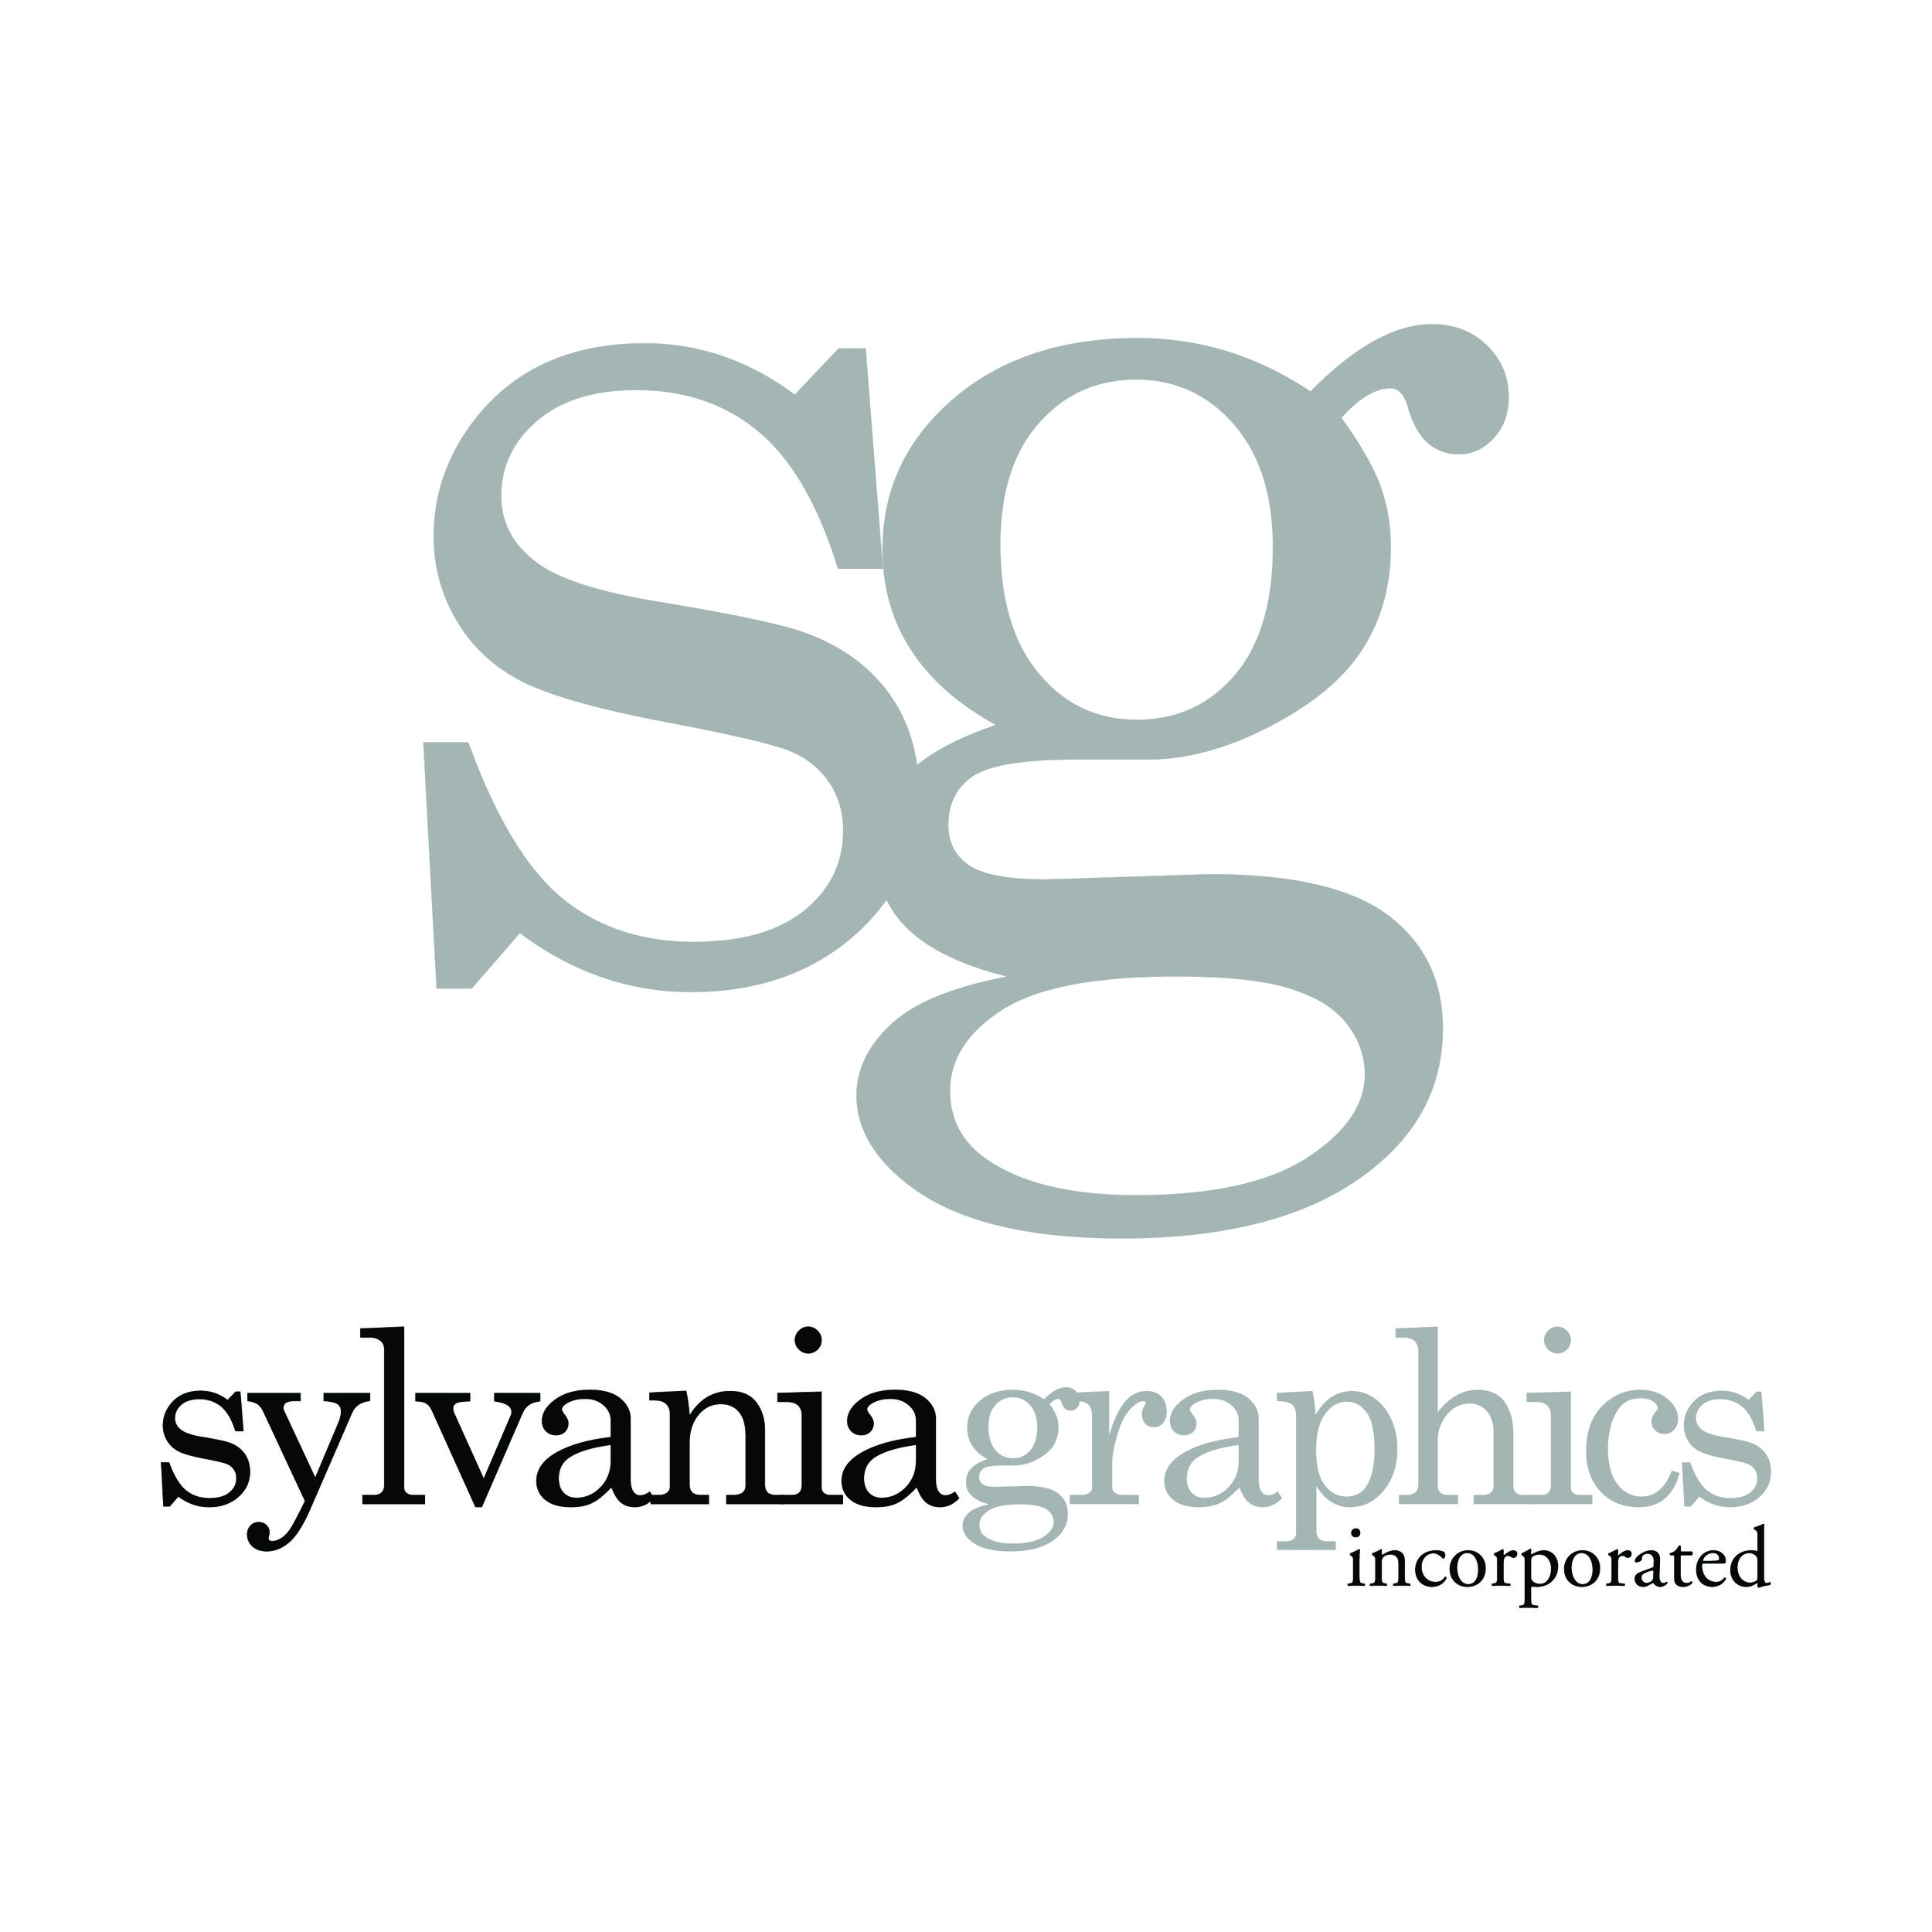 Sylvania Graphics Incorporated